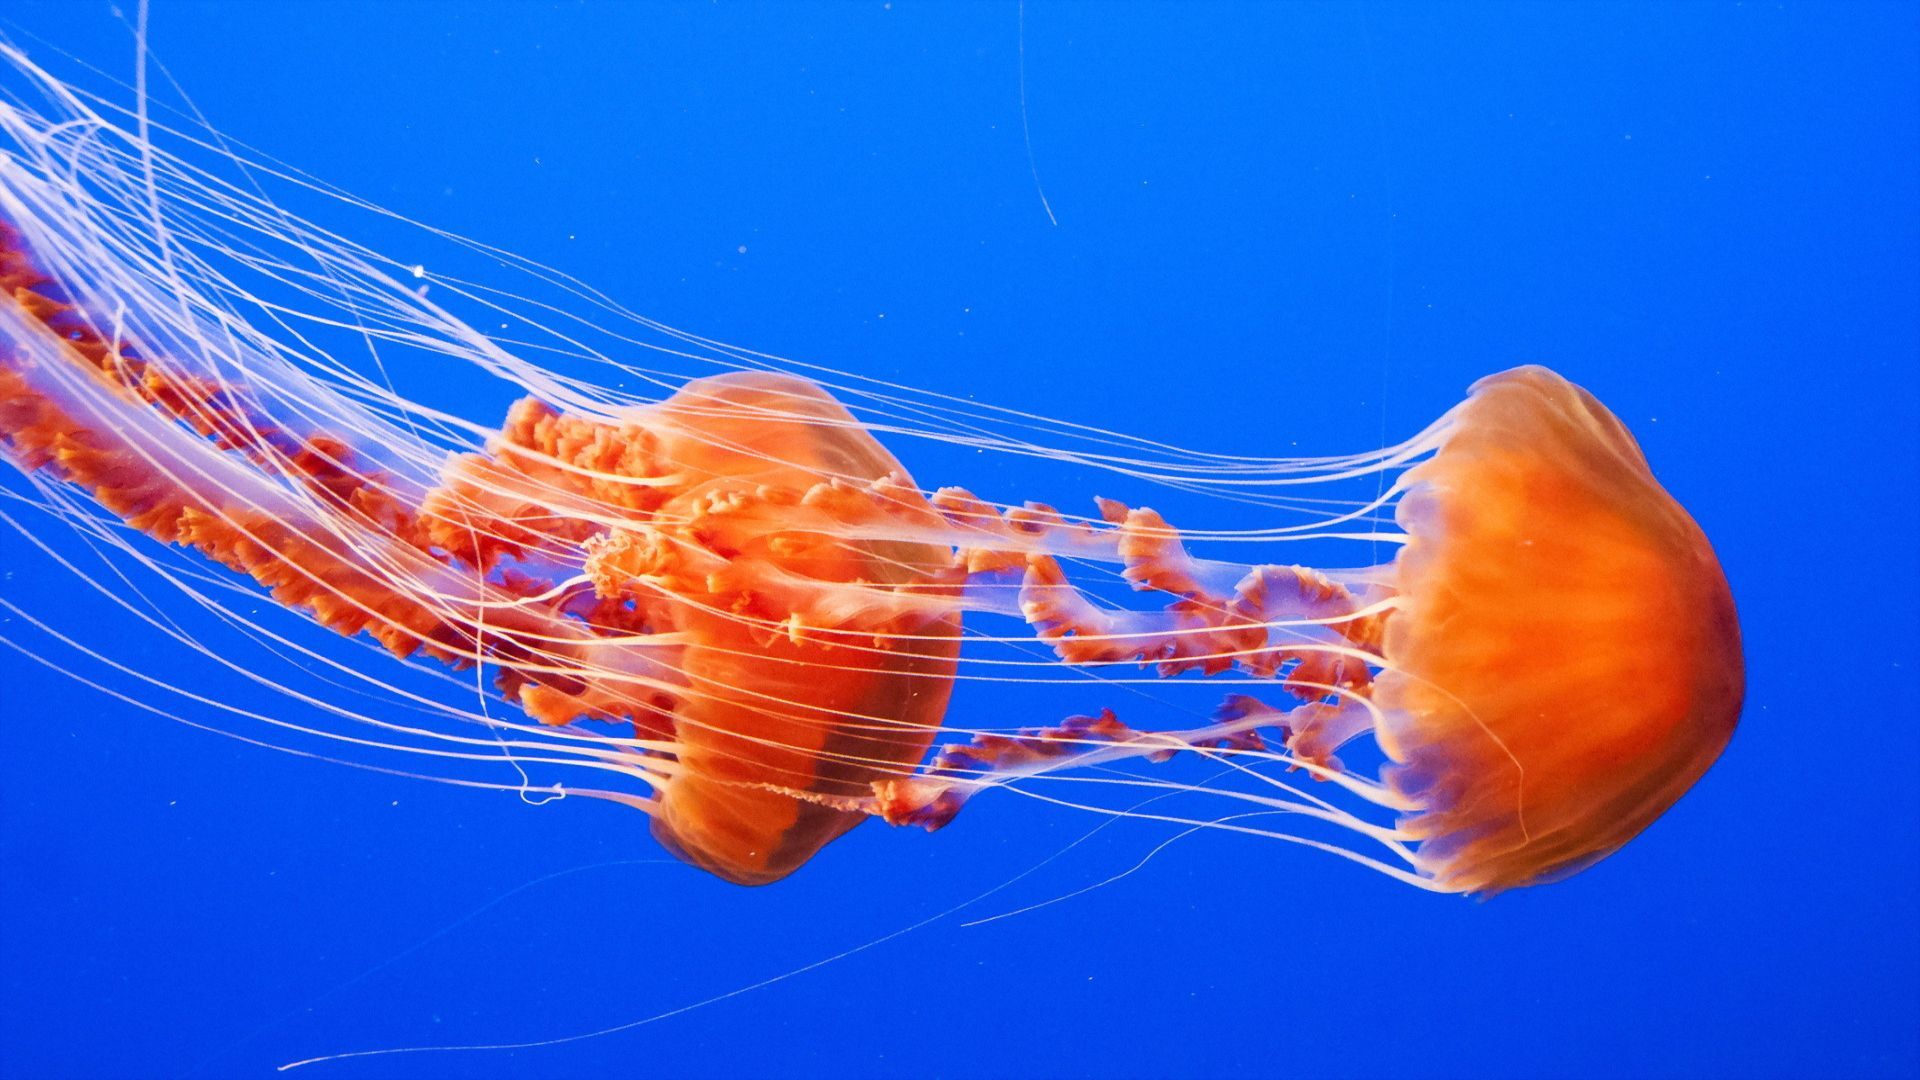 Jellyfish vertical wallpaper hd